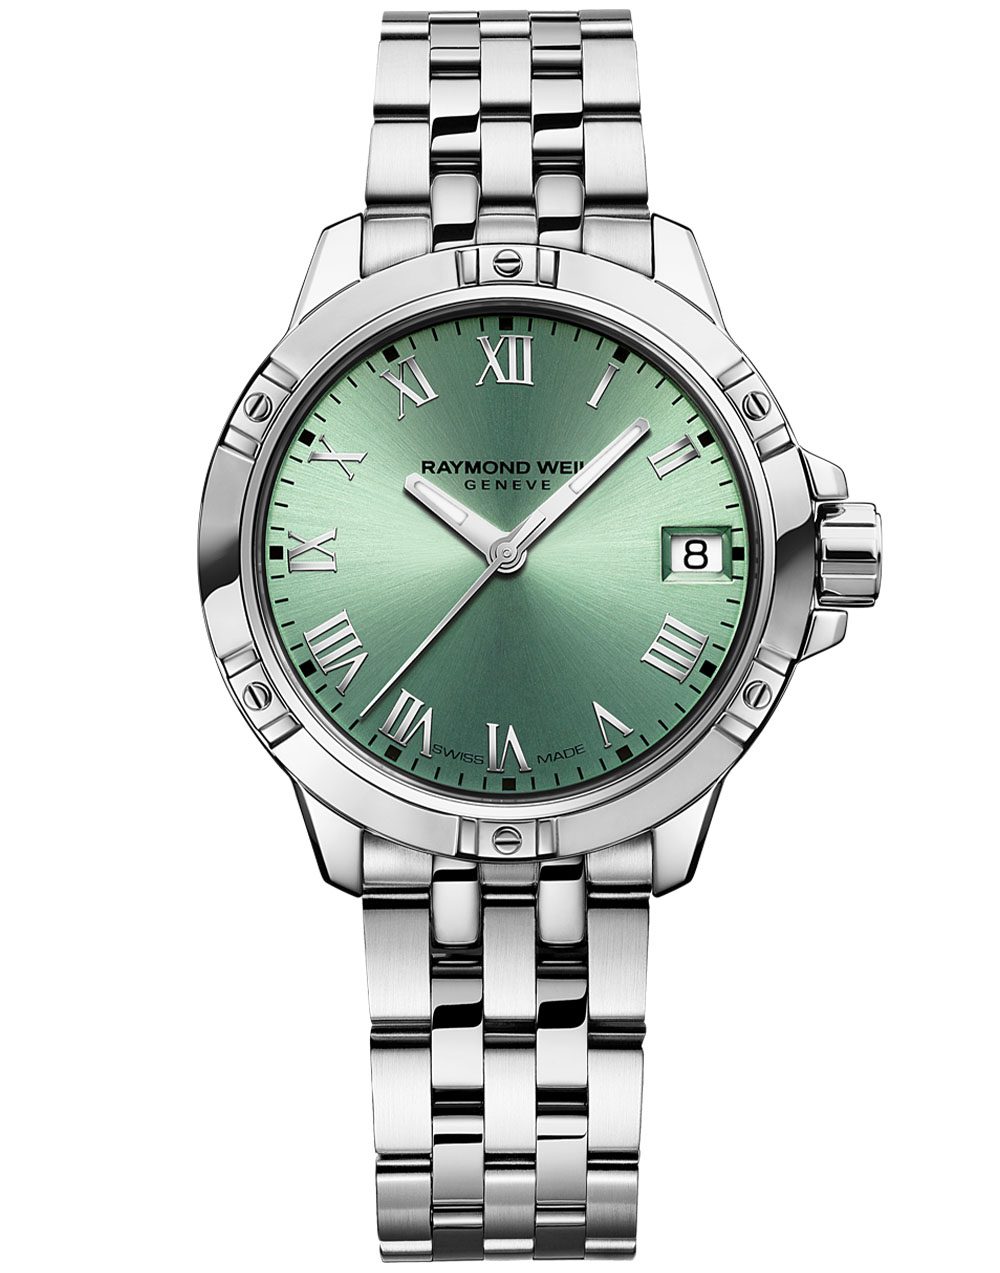 Raymond Weil ango Classic Ladies Quartz Green Dial Steel Date Watch, 30mm (5960-ST-00520)
Stainless steel bracelet, Green dial, Roman numerals